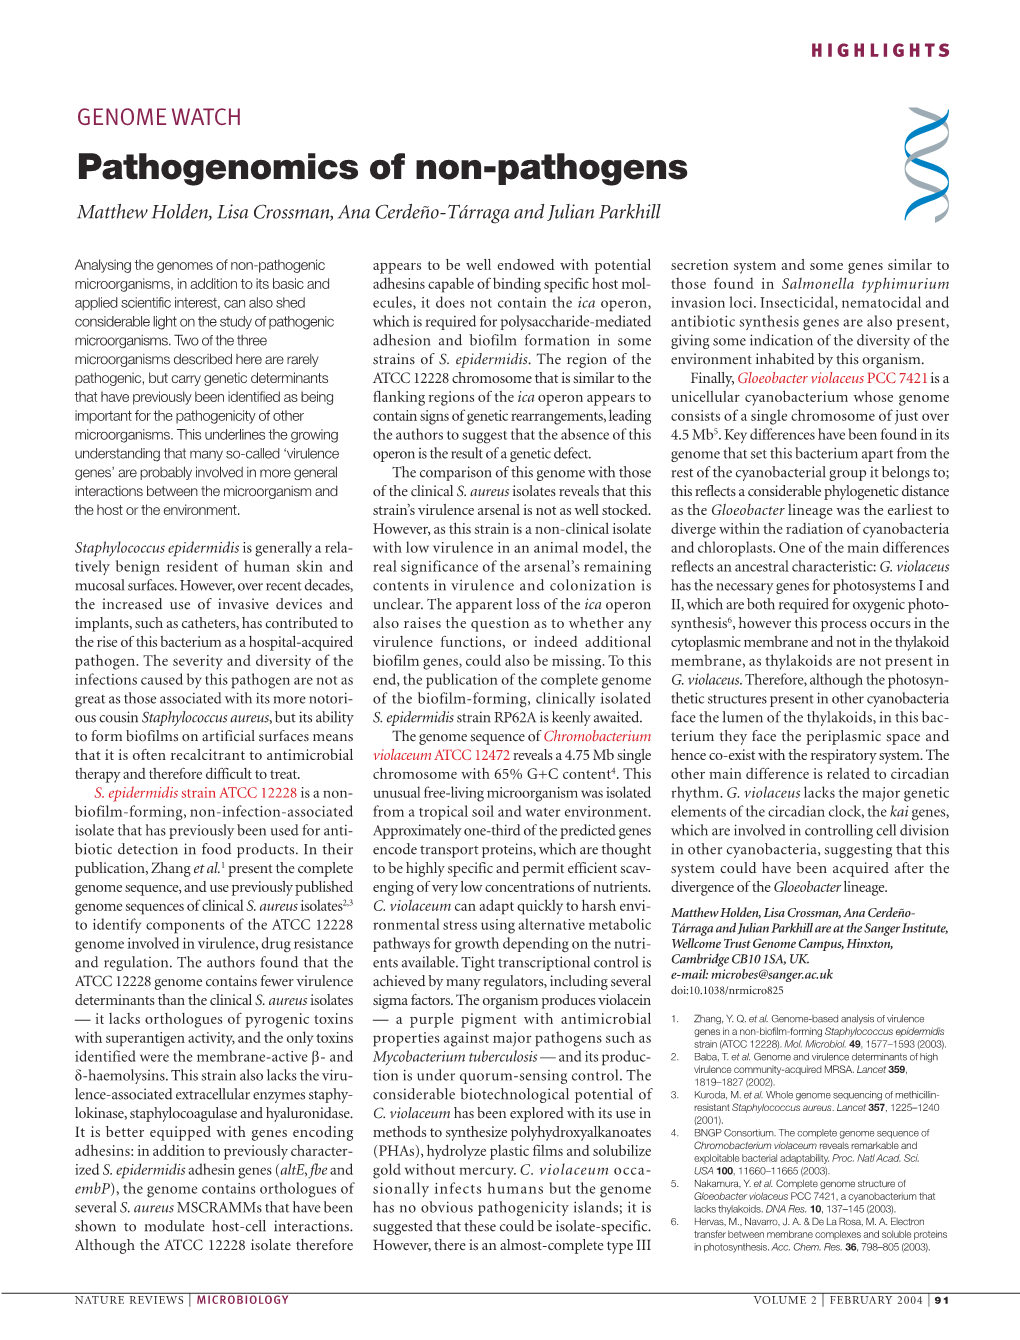 Pathogenomics of Non-Pathogens Matthew Holden, Lisa Crossman, Ana Cerdeño-Tárraga and Julian Parkhill